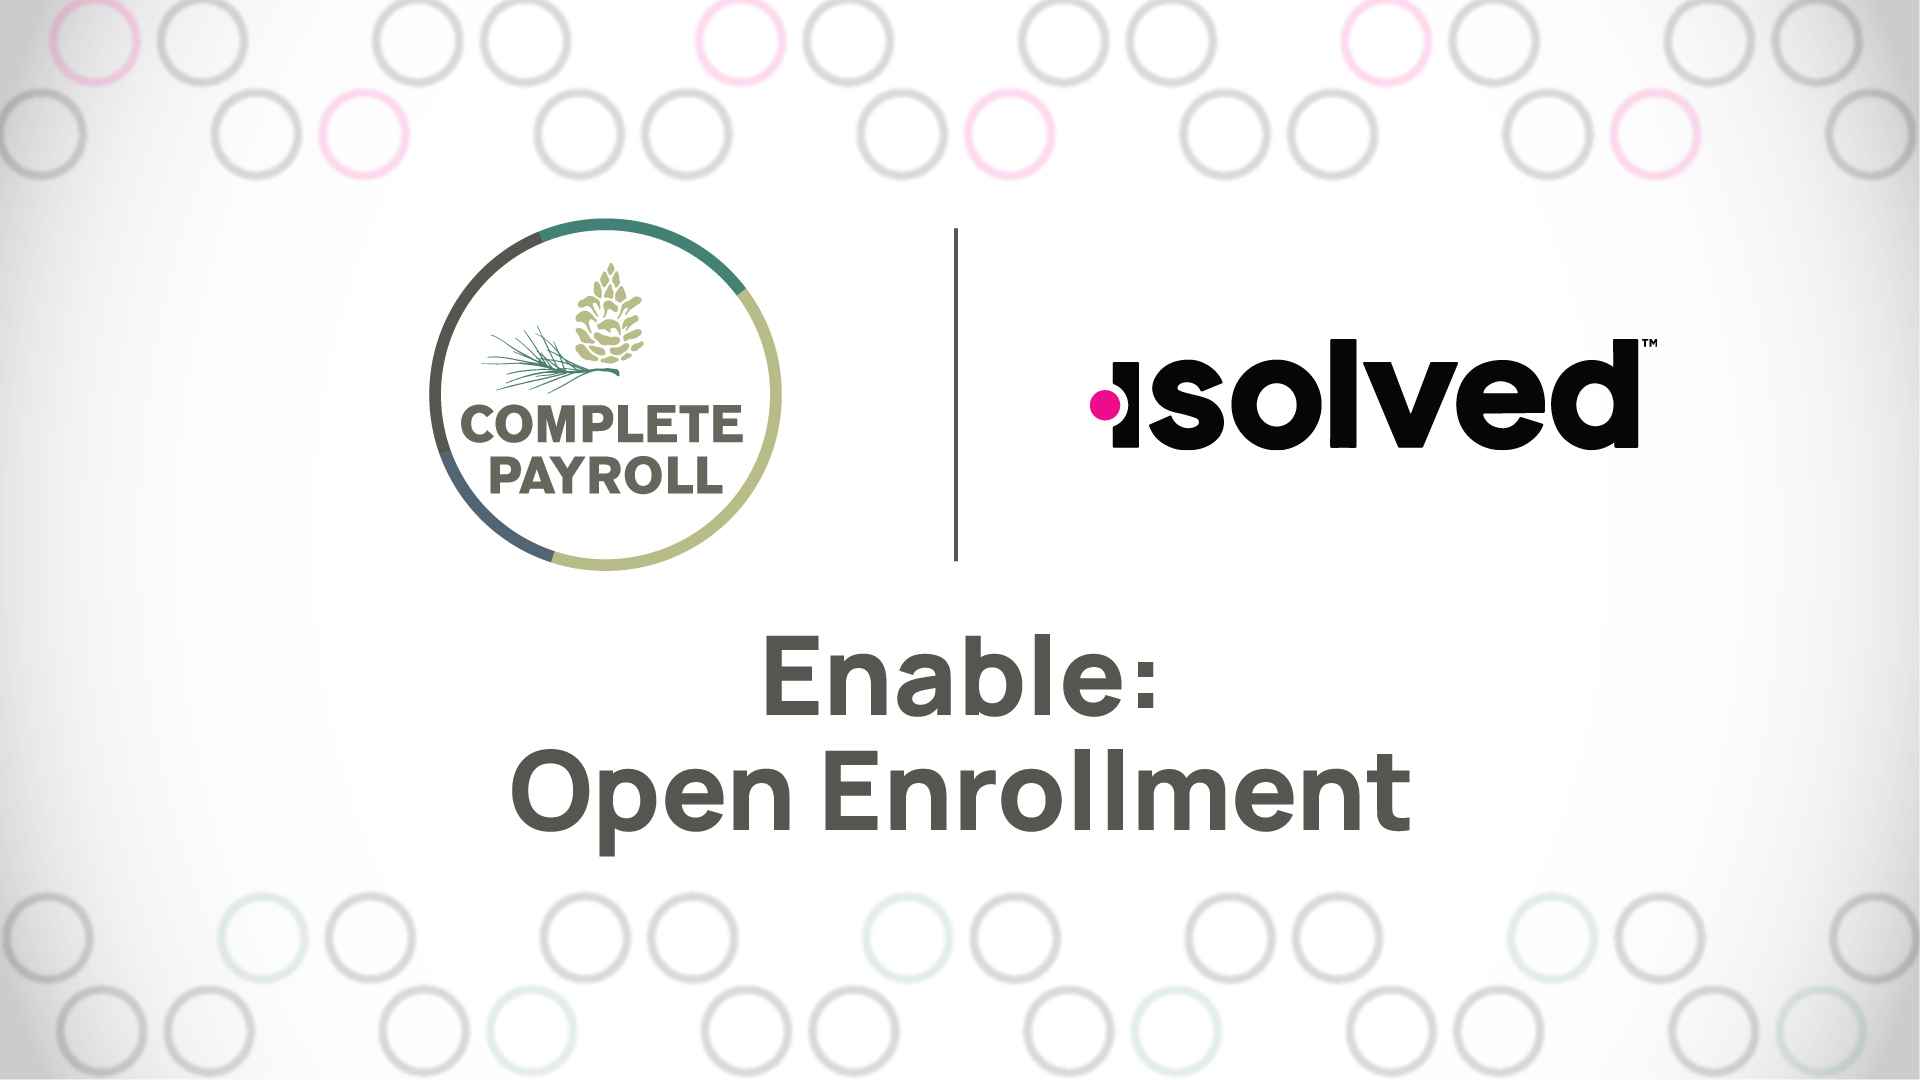 Enable: Open Enrollment